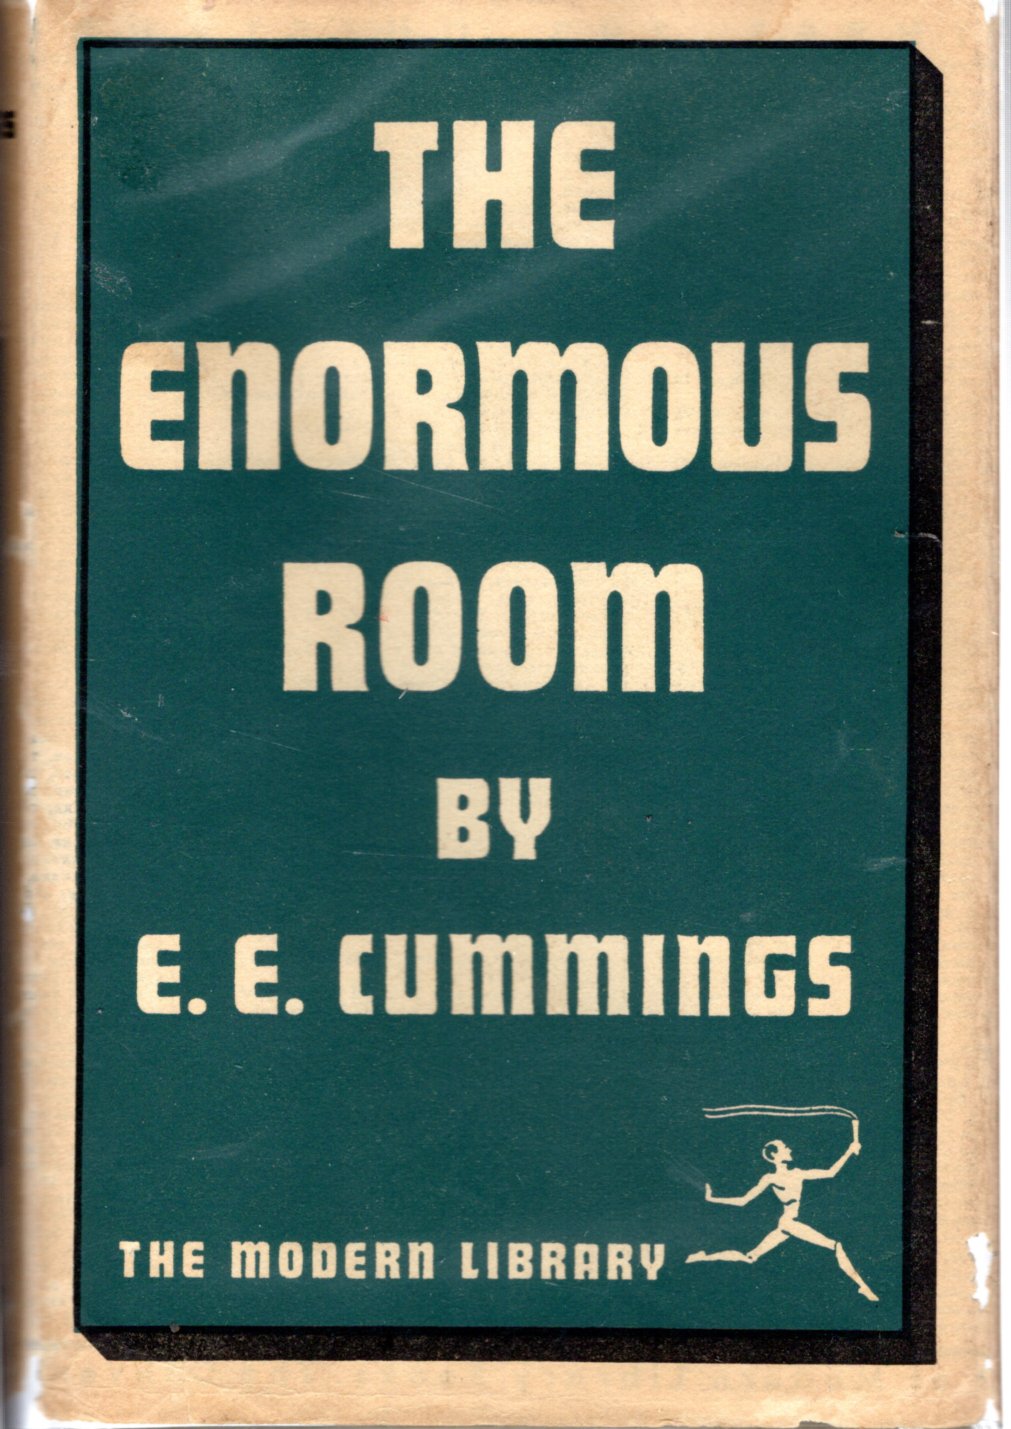 The Enormous Room - cummings, e.e. (Edward Estlin)